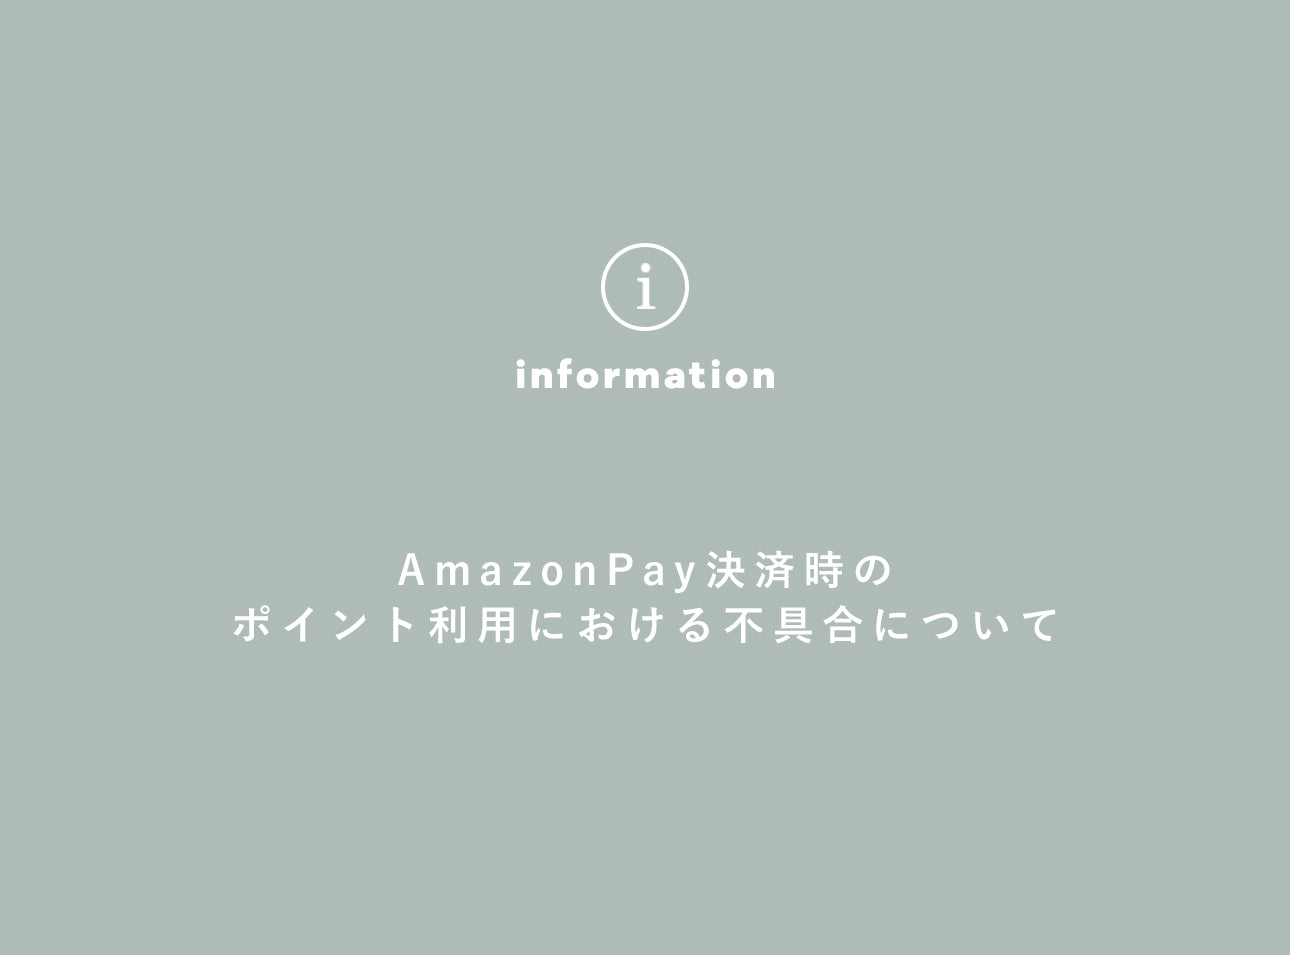 AmazonPay決済時のポイント利用における不具合について